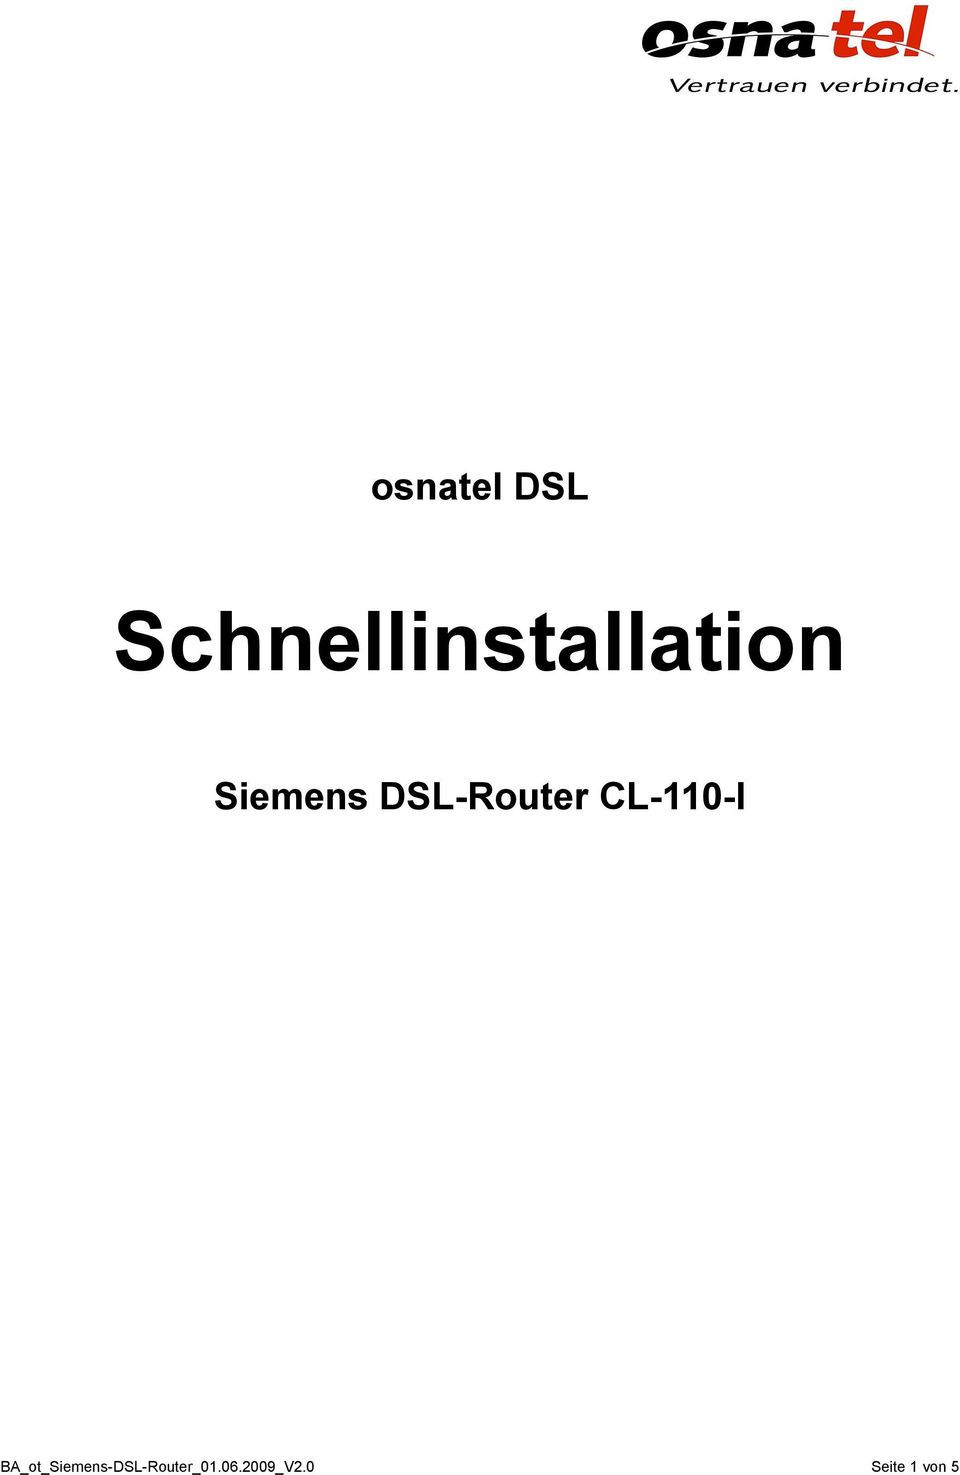 DSL-Router CL-110-I